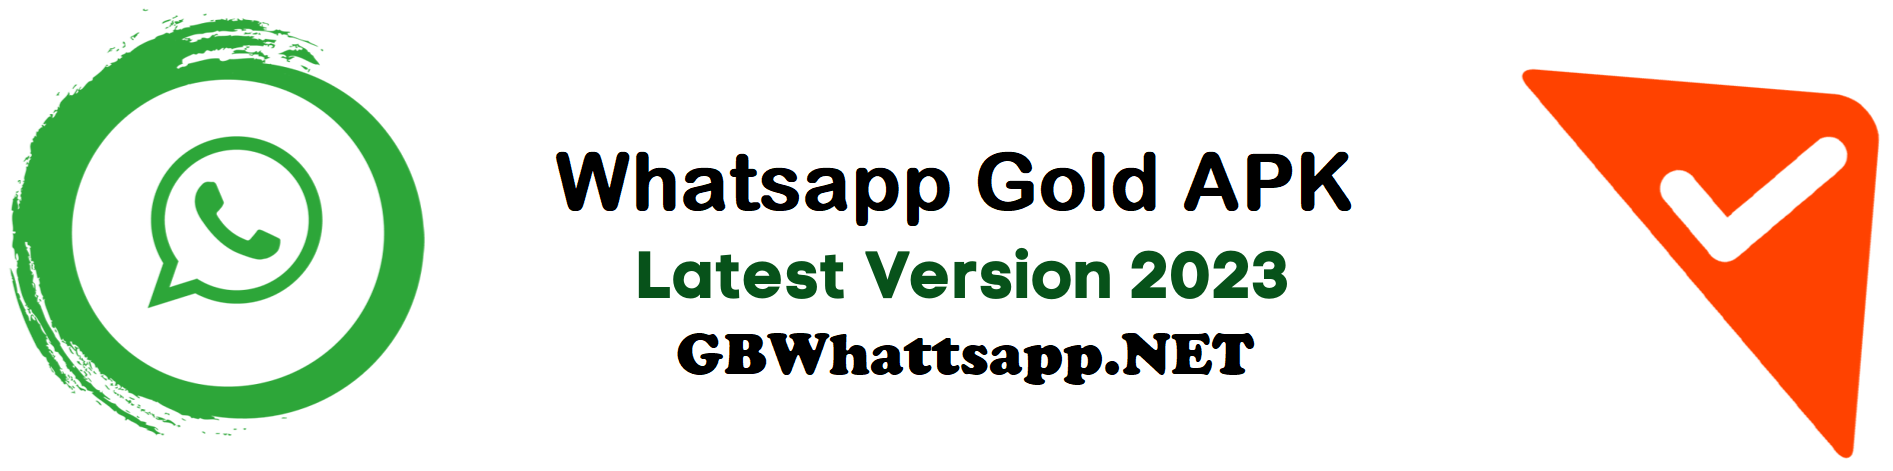 Whatsapp Gold APK